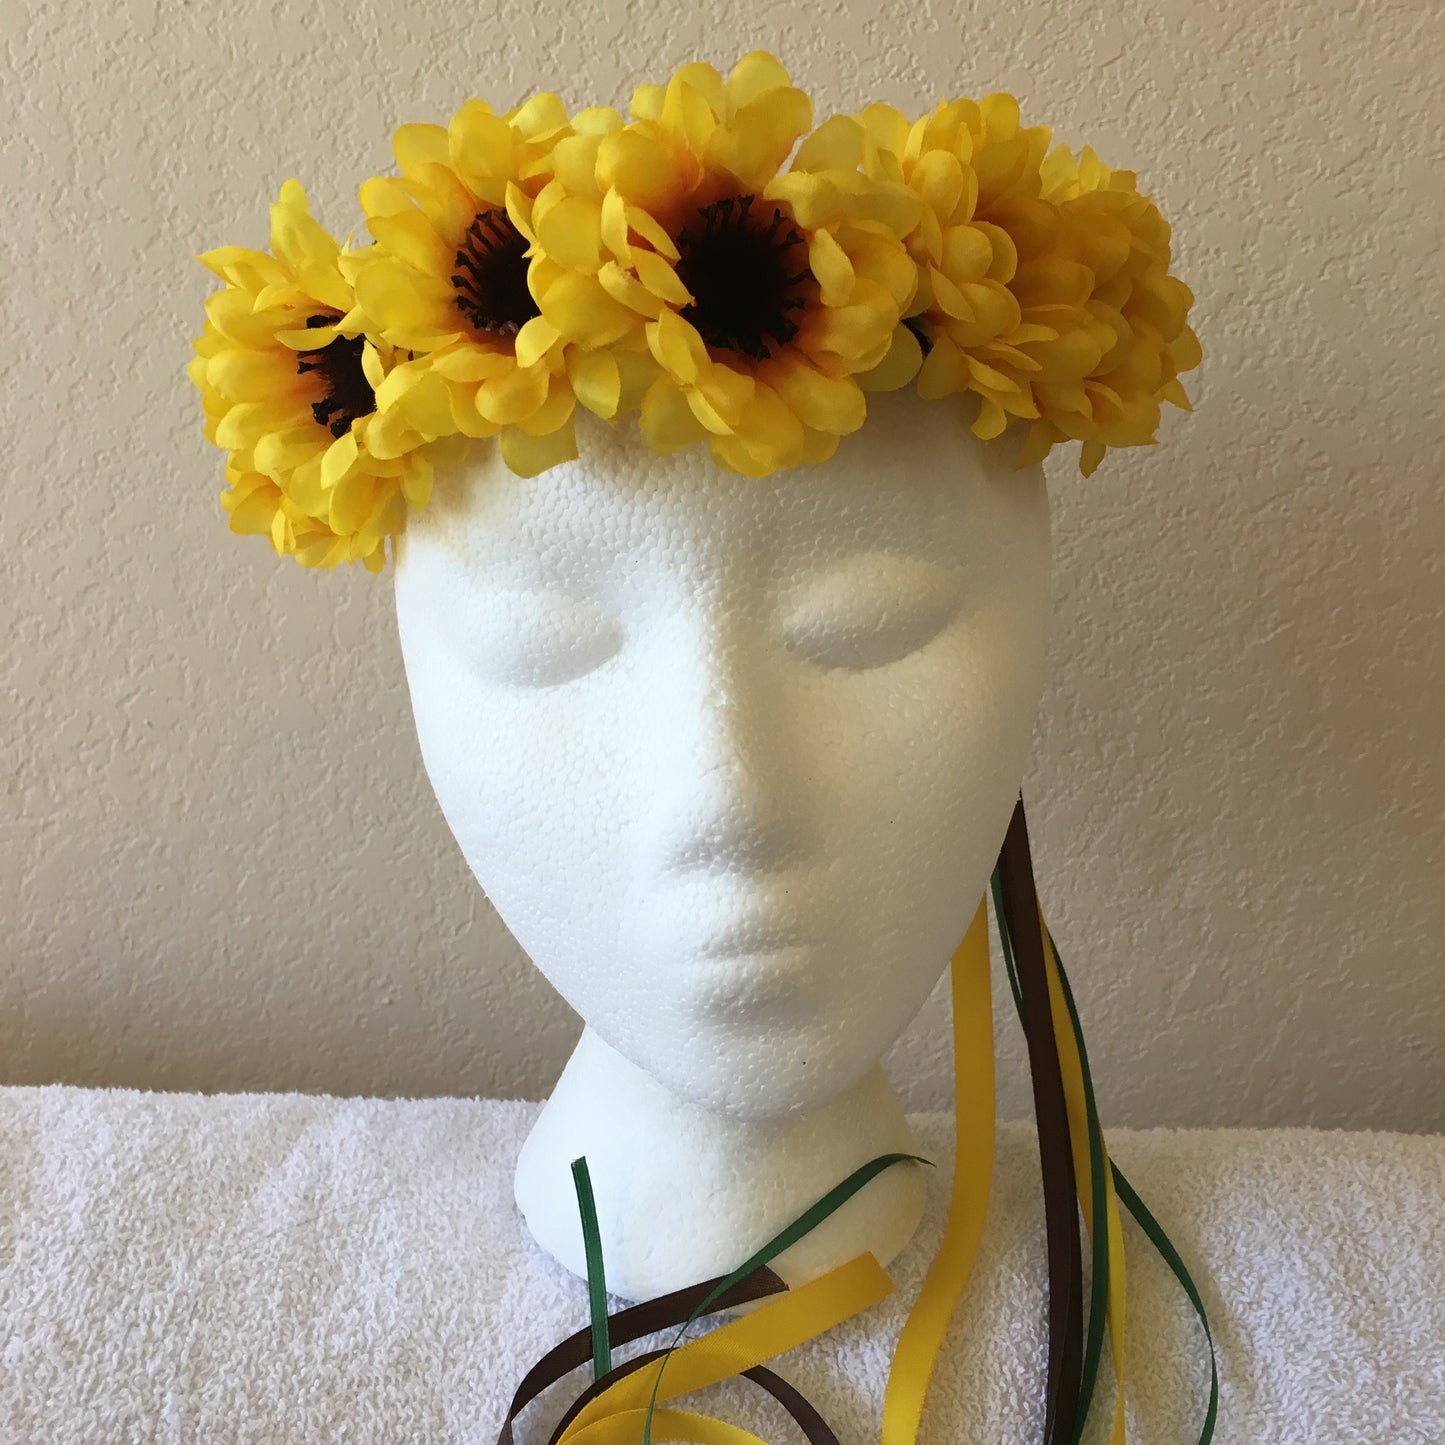 Small Wreath - Yellow sunflowers